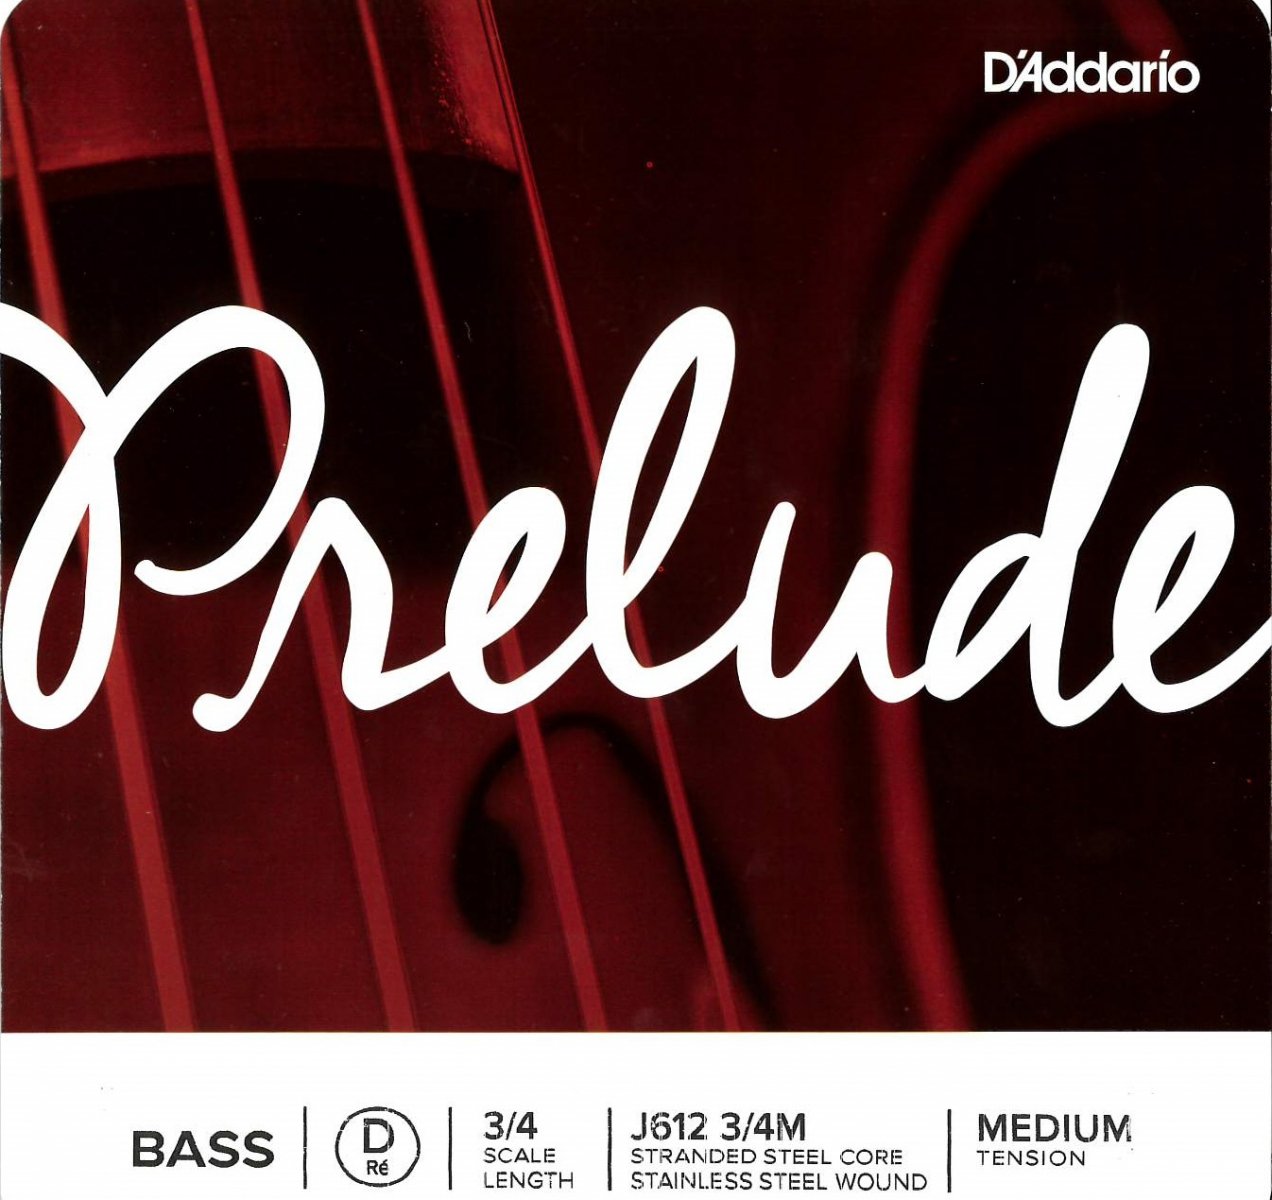 Prelude】ﾌﾟﾚﾘｭｰﾄﾞ-D'addario- - I Love Strings. | 国内最大級 ...